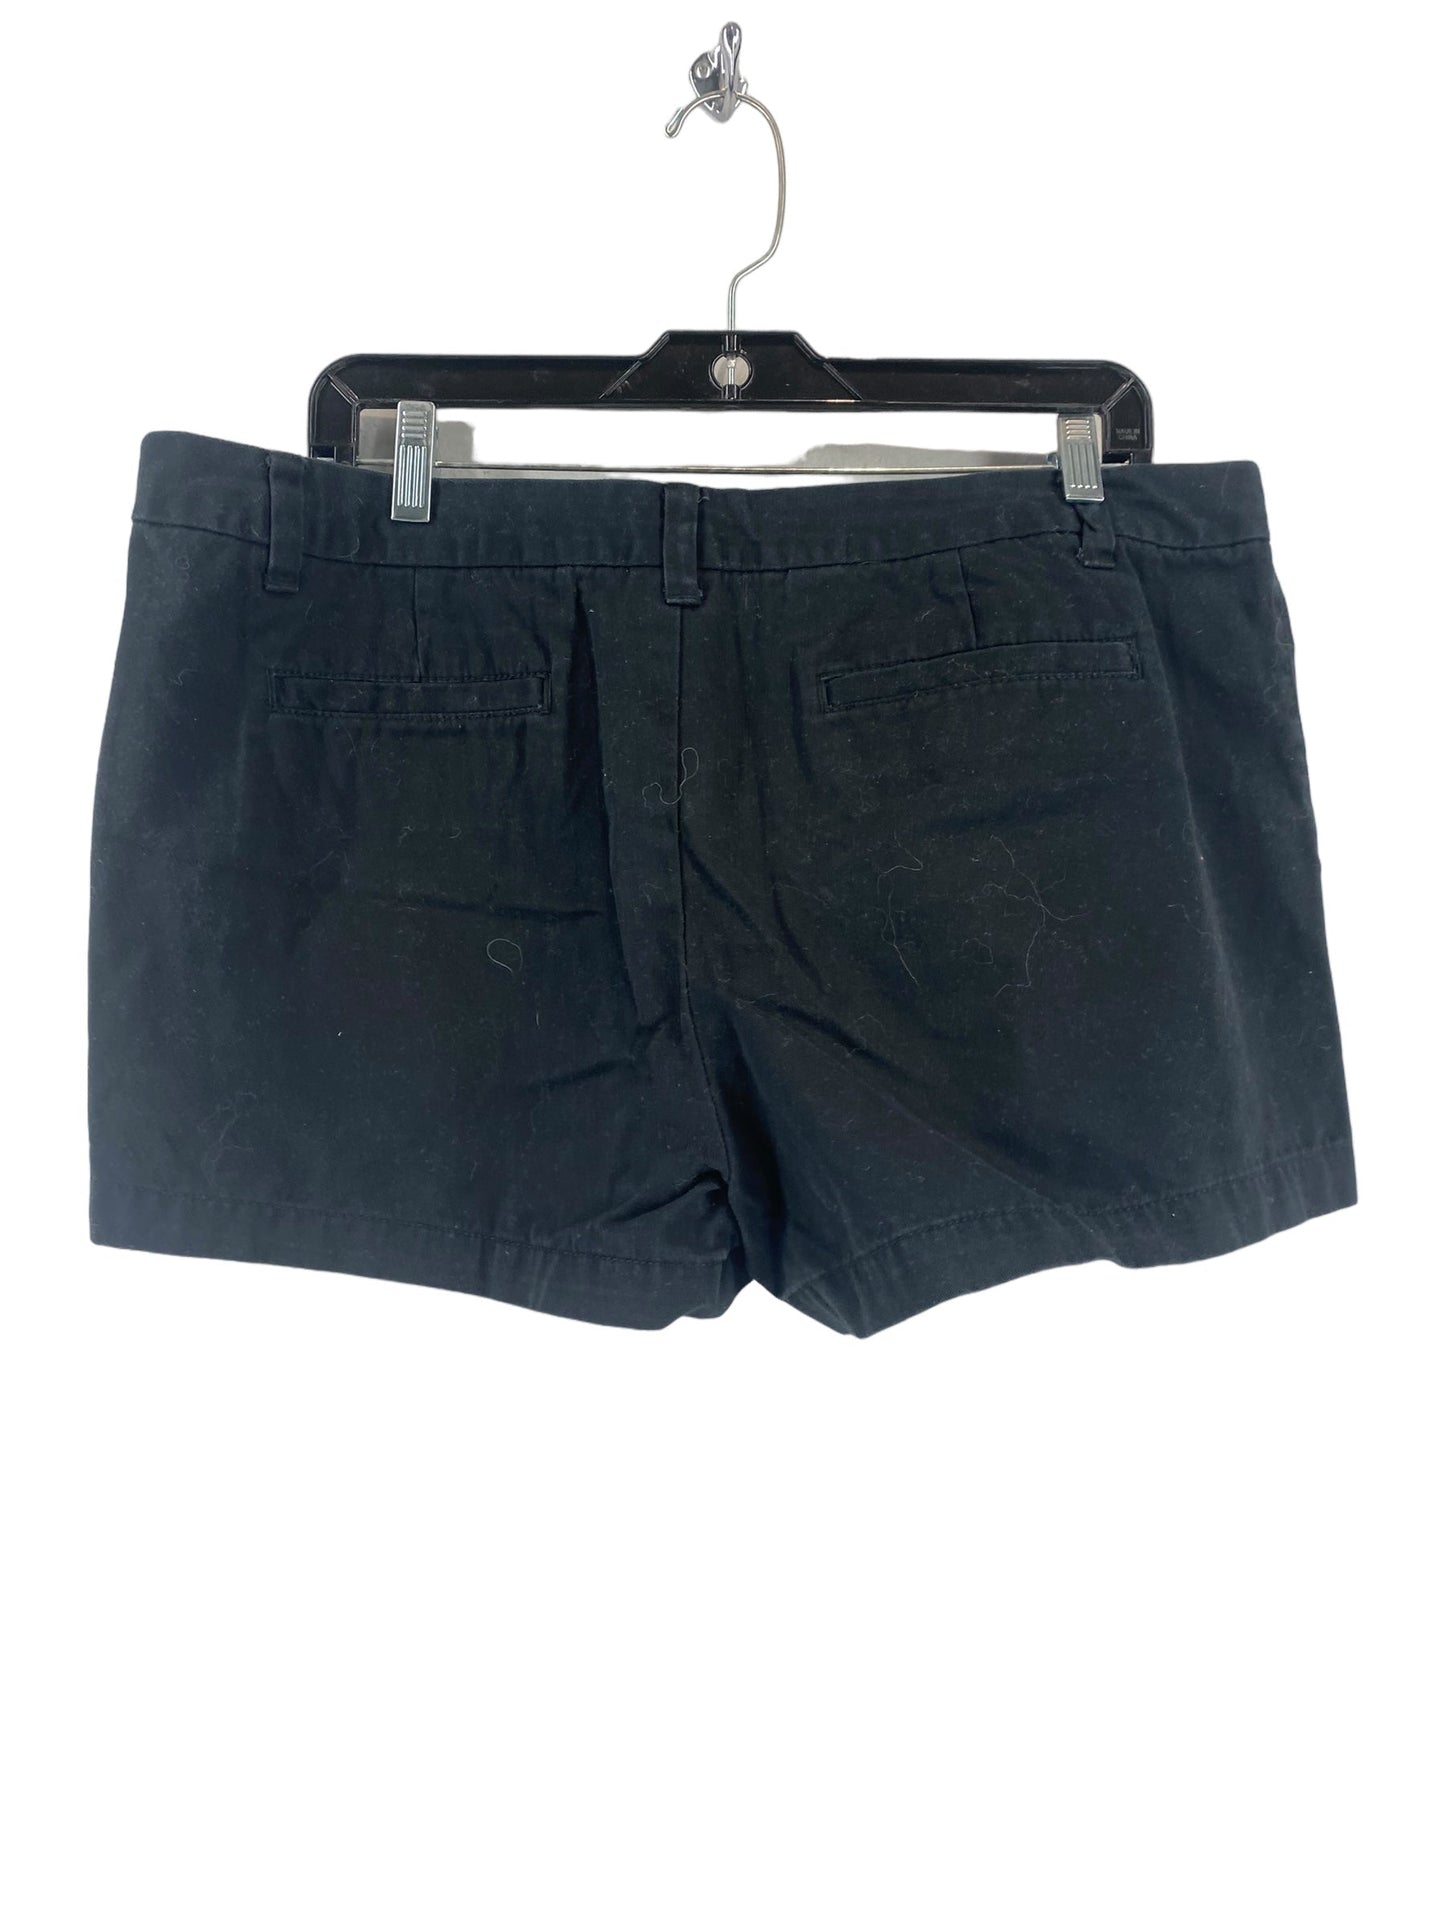 Black Shorts Merona, Size 14